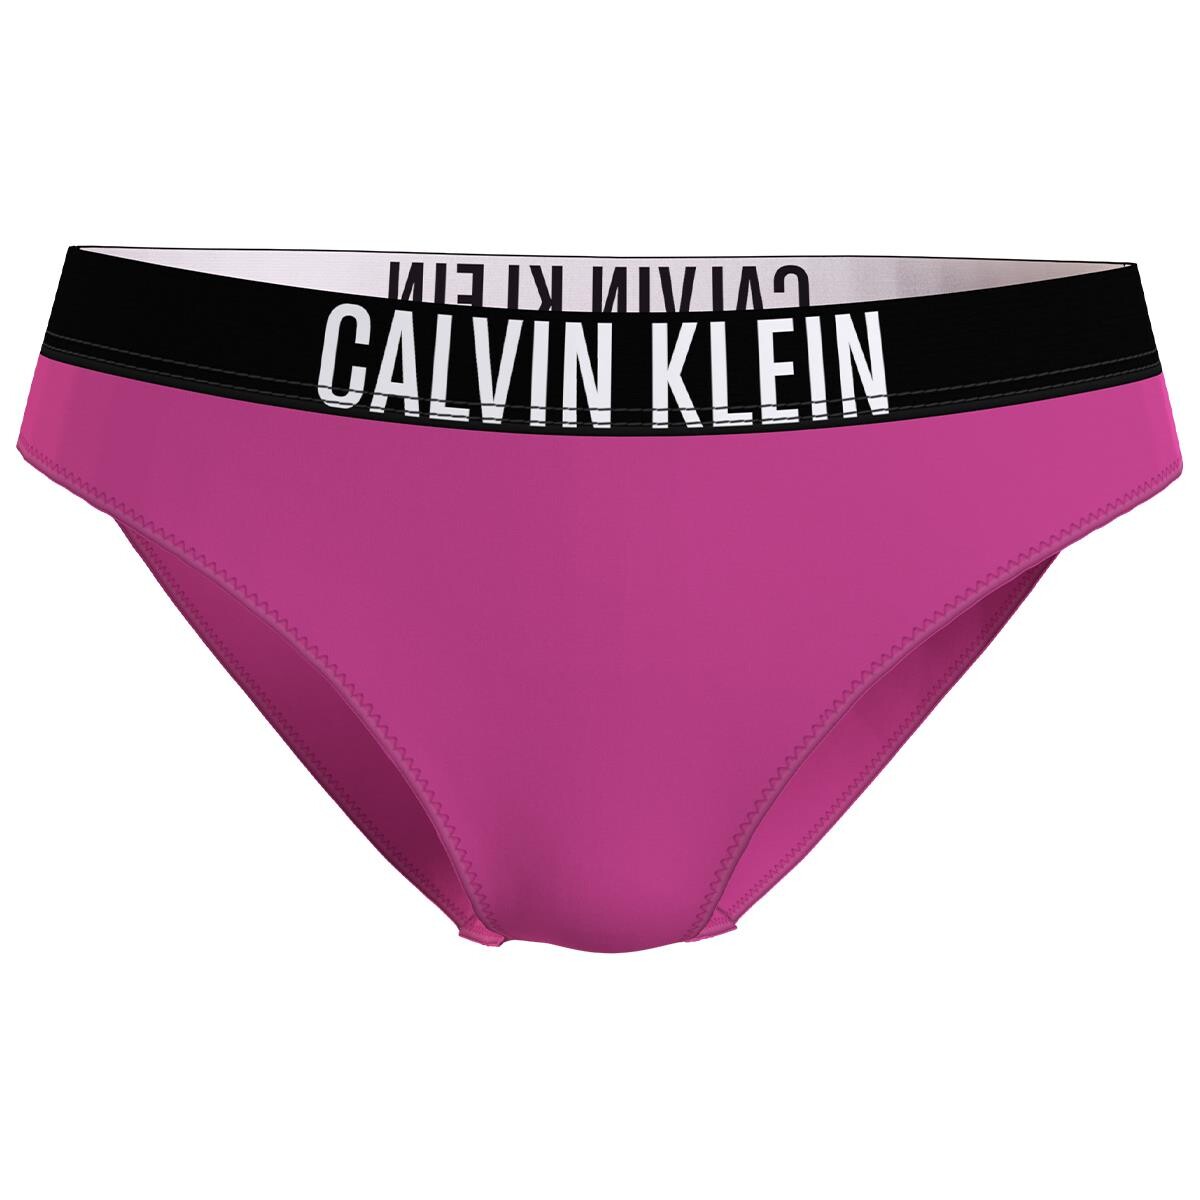 Calvin Klein Bikini Tai trusse, Farve: Stunning Orchid, Størrelse: M, Dame